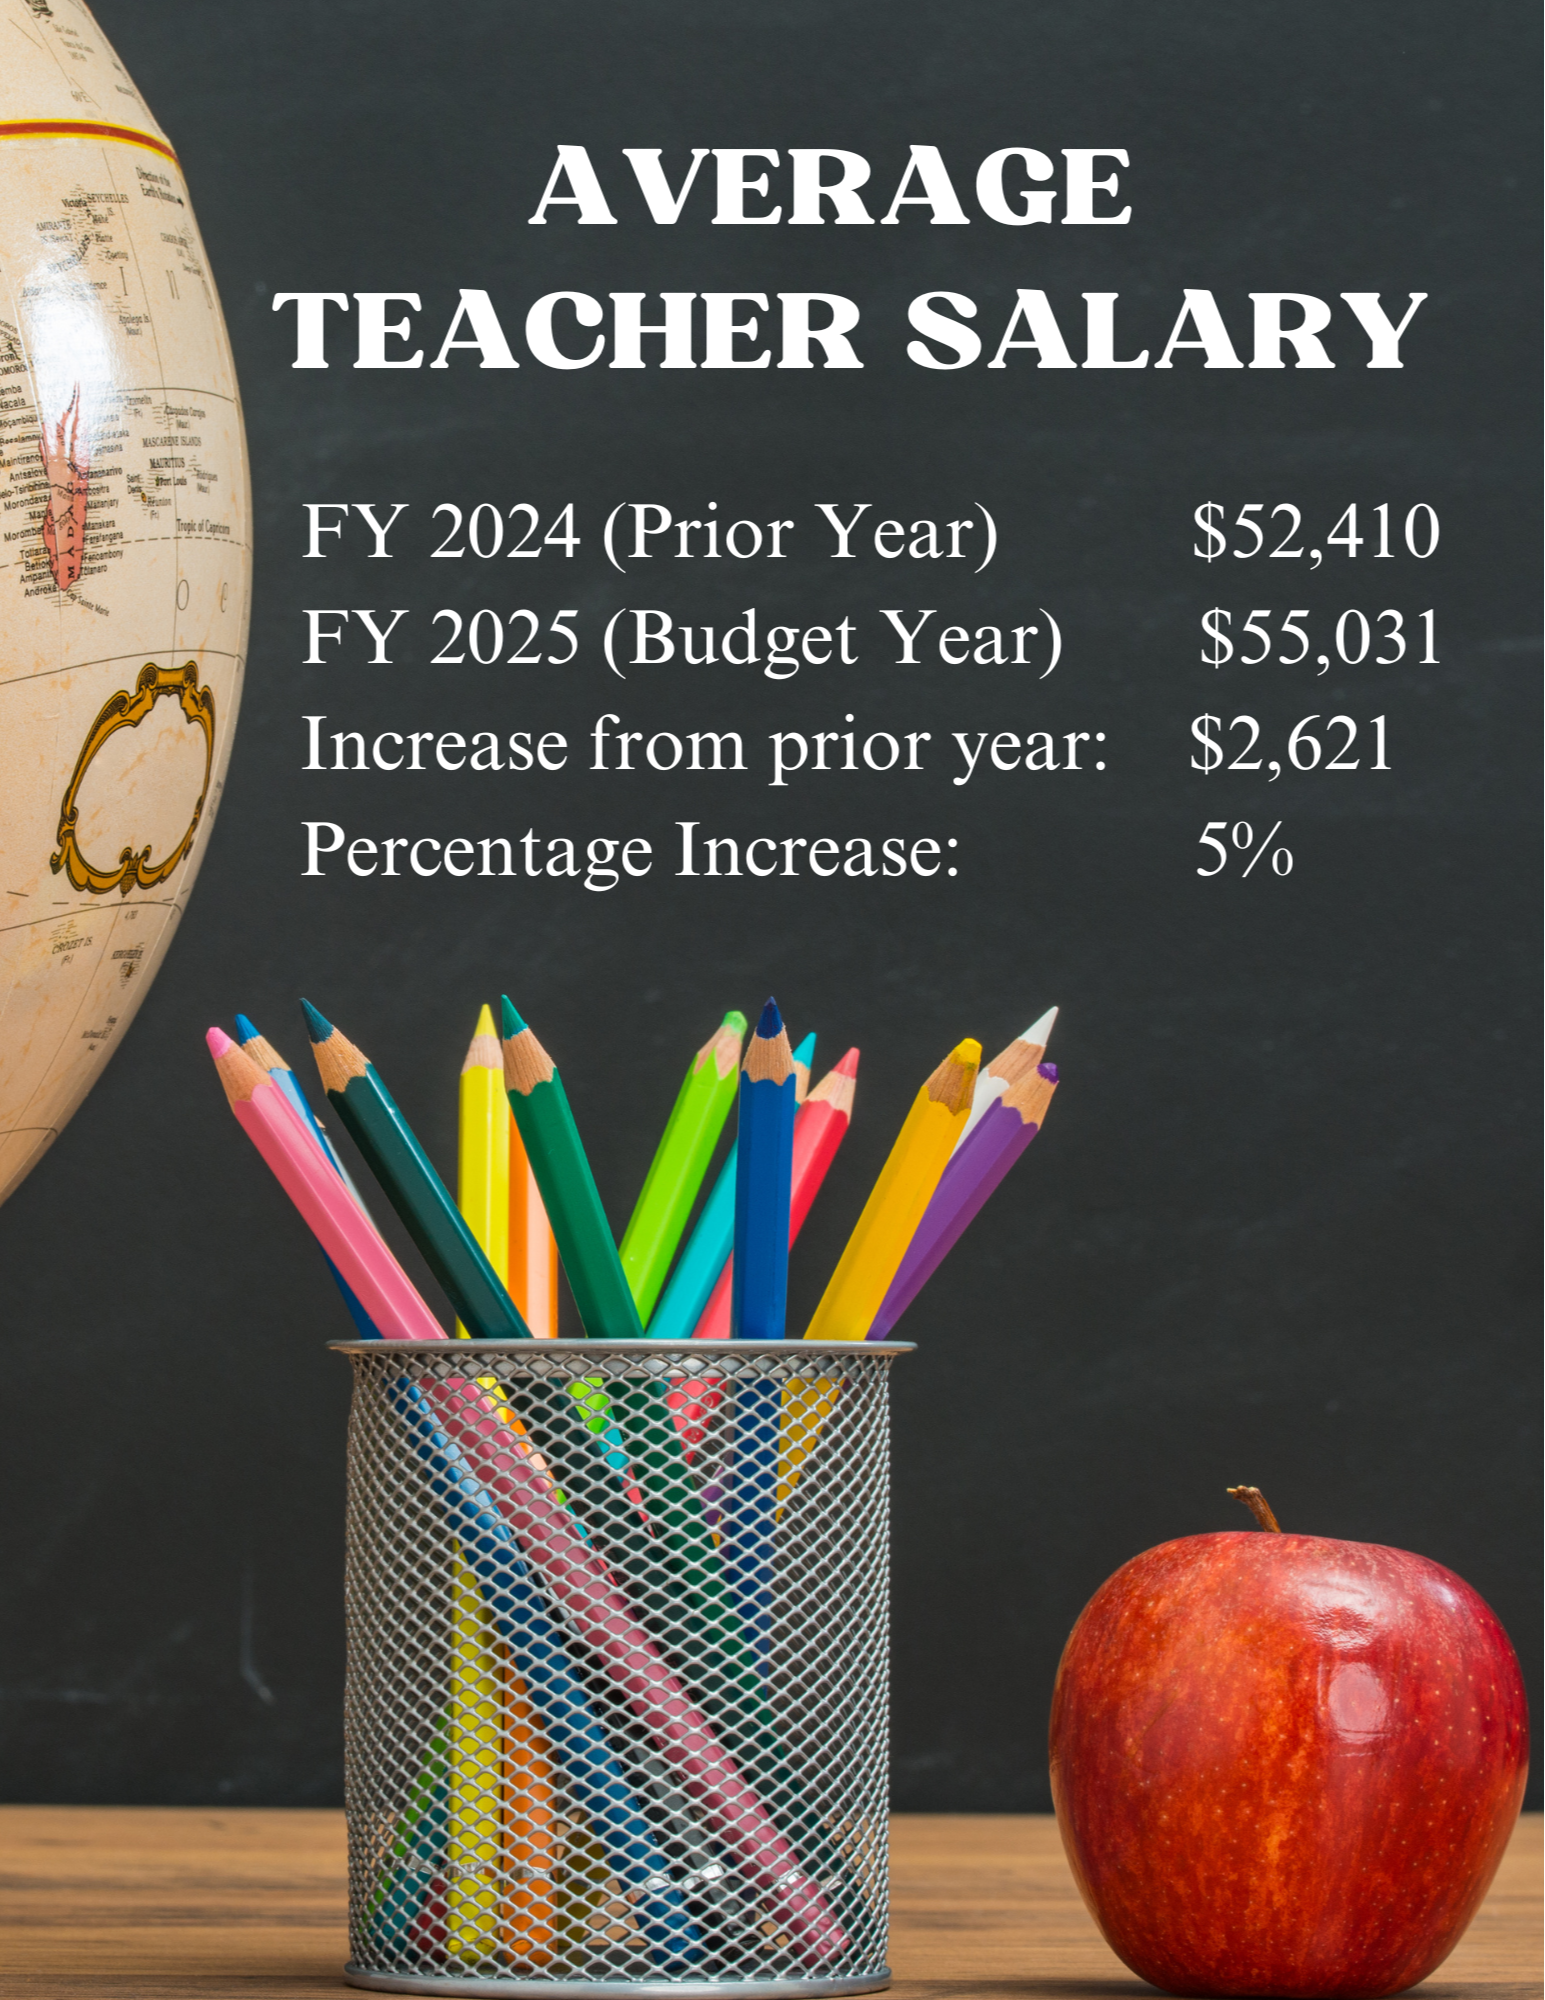 Average Teacher Salary for 2023 and 2024